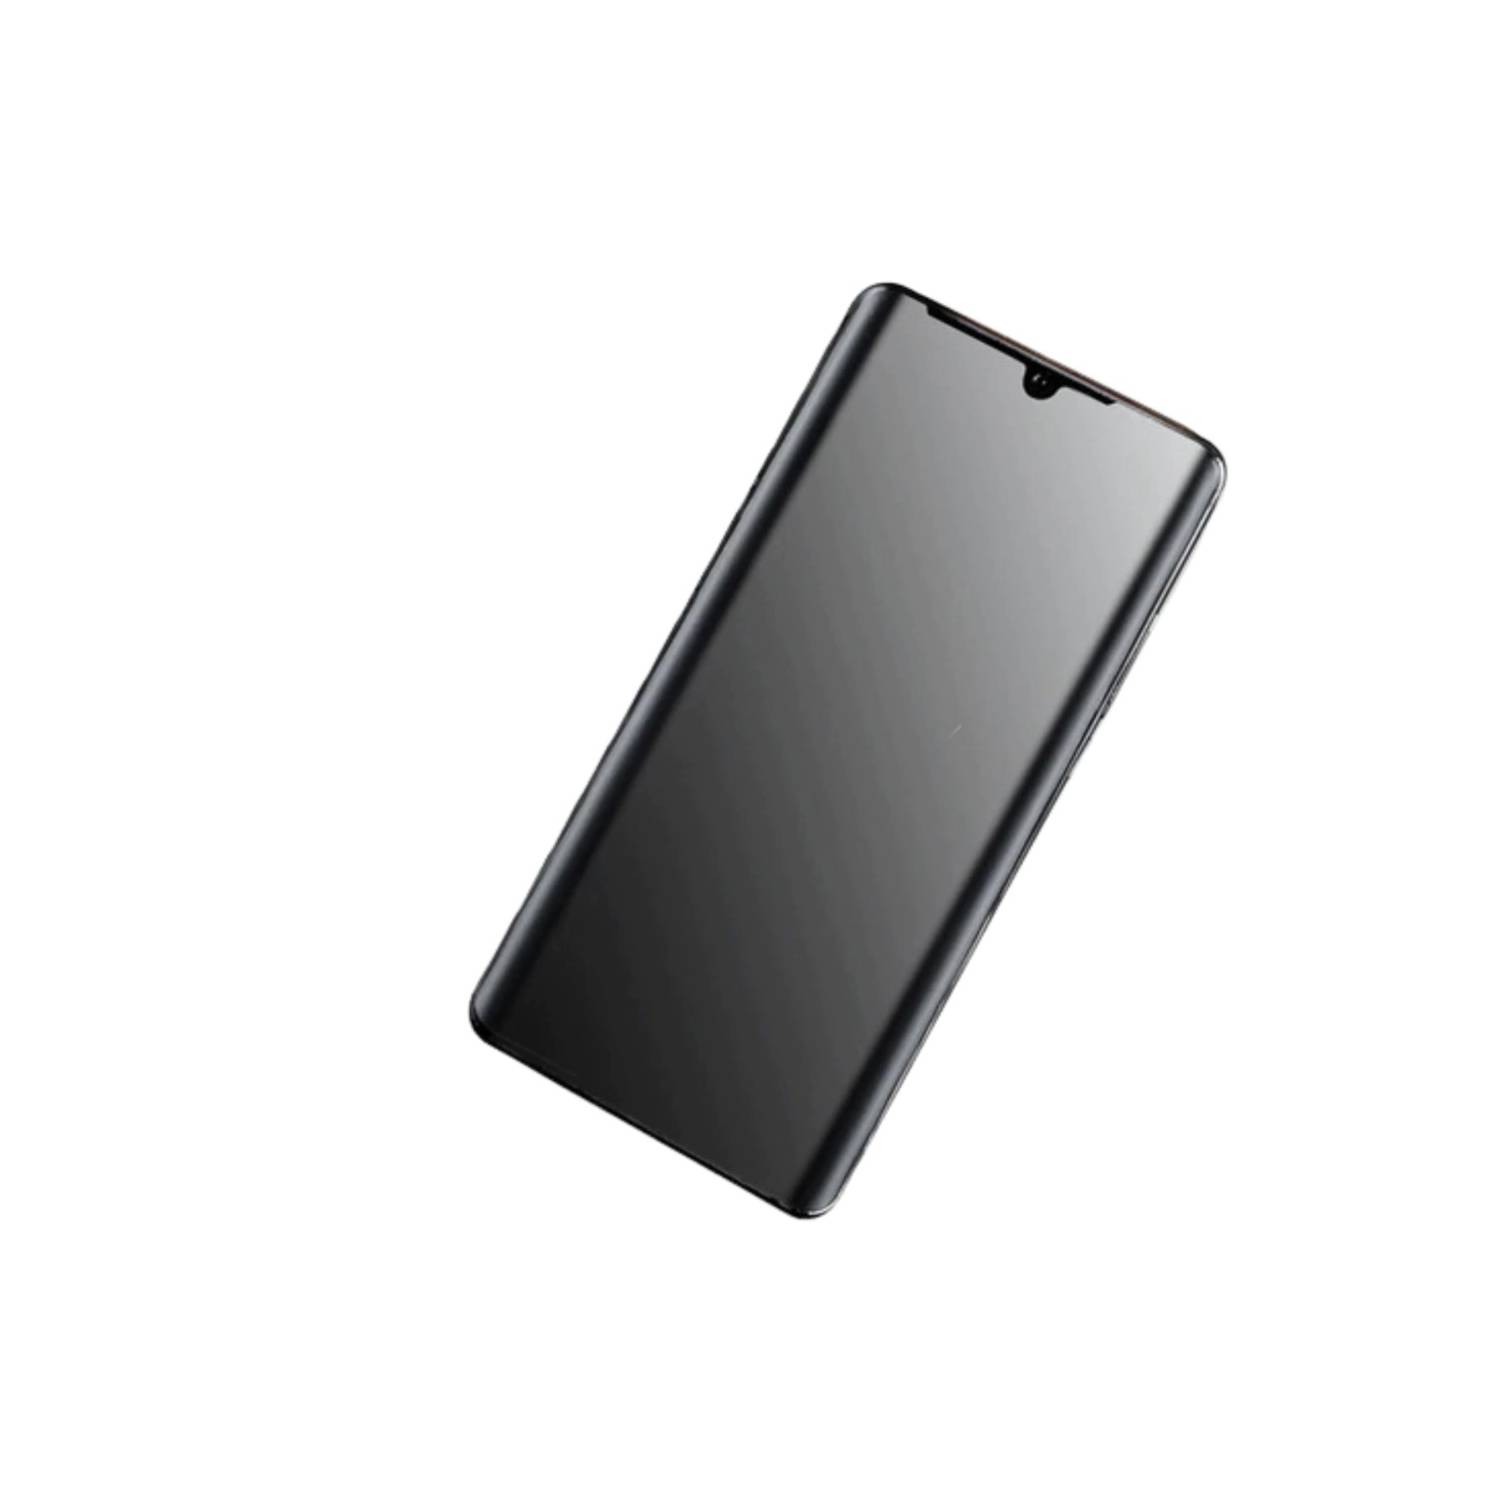 Xiaomi Redmi Note 11 Pro 5G Hidrogel Antiespia Mate Protector